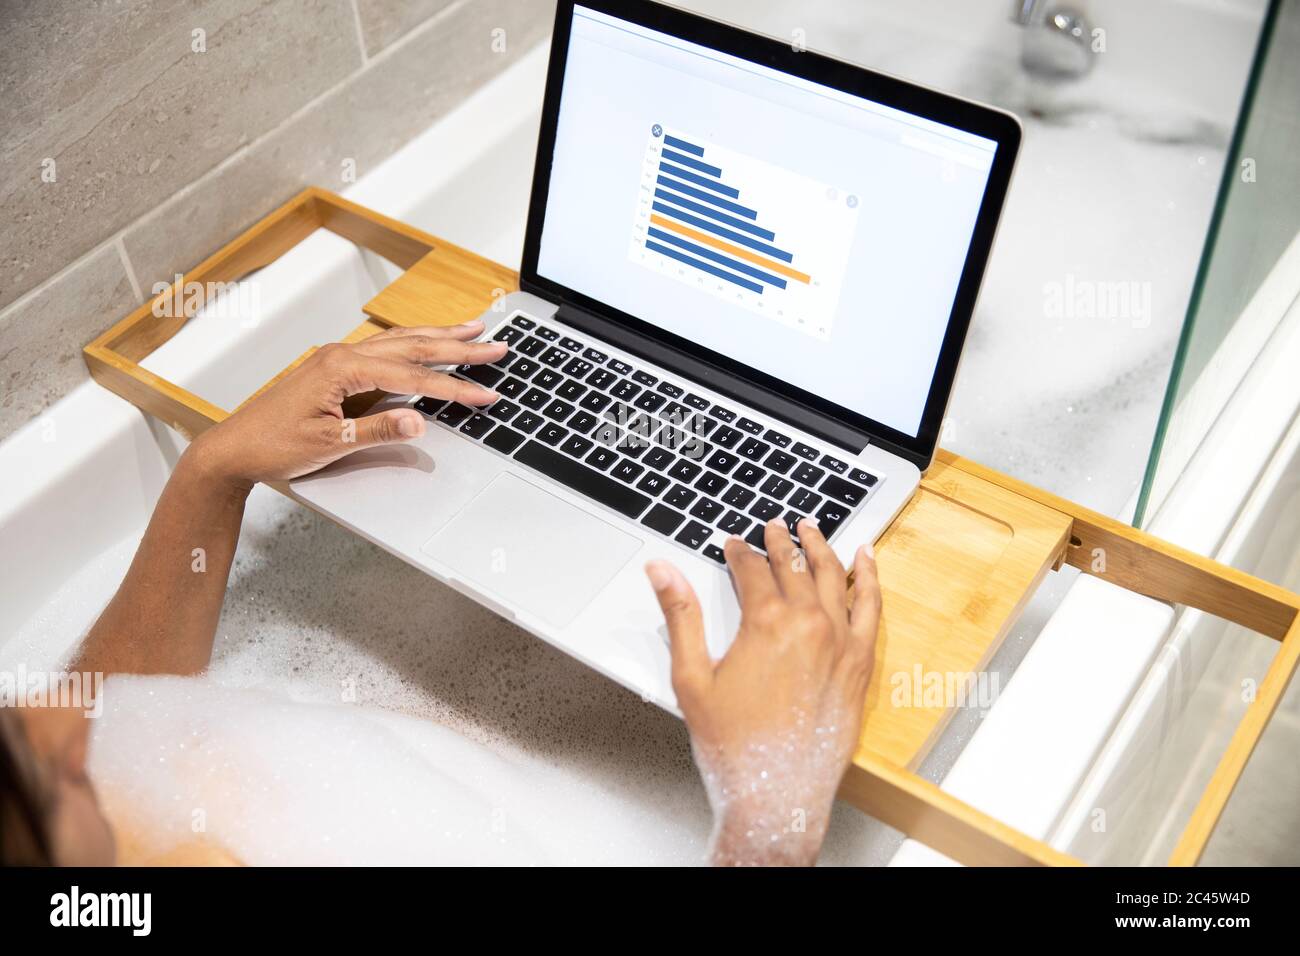 Woman sitting in bathtub, having foam bath and working on laptop during Coronavirus crisis. Stock Photo